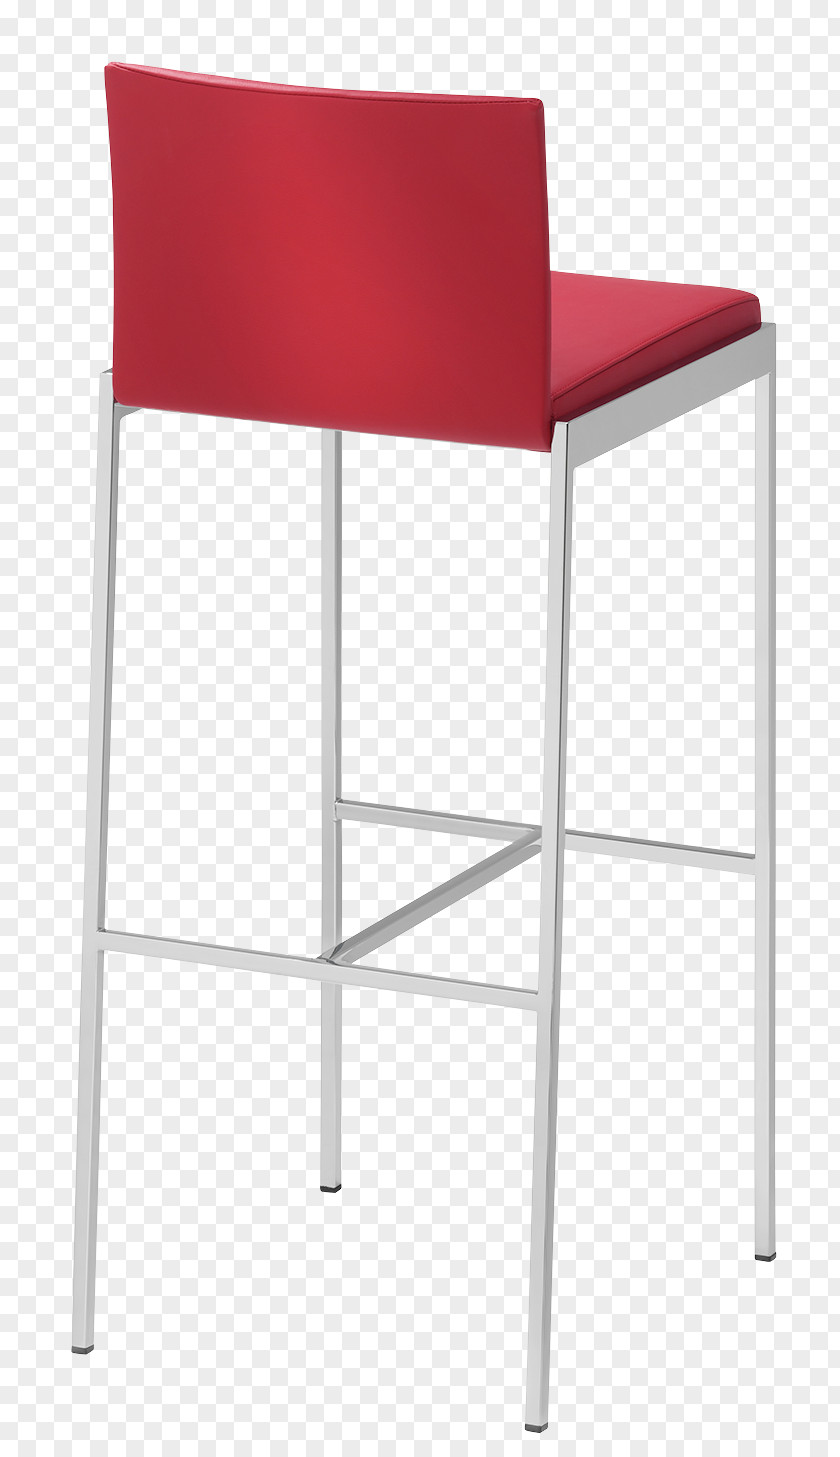 Chair Bar Stool Armrest Product Design PNG